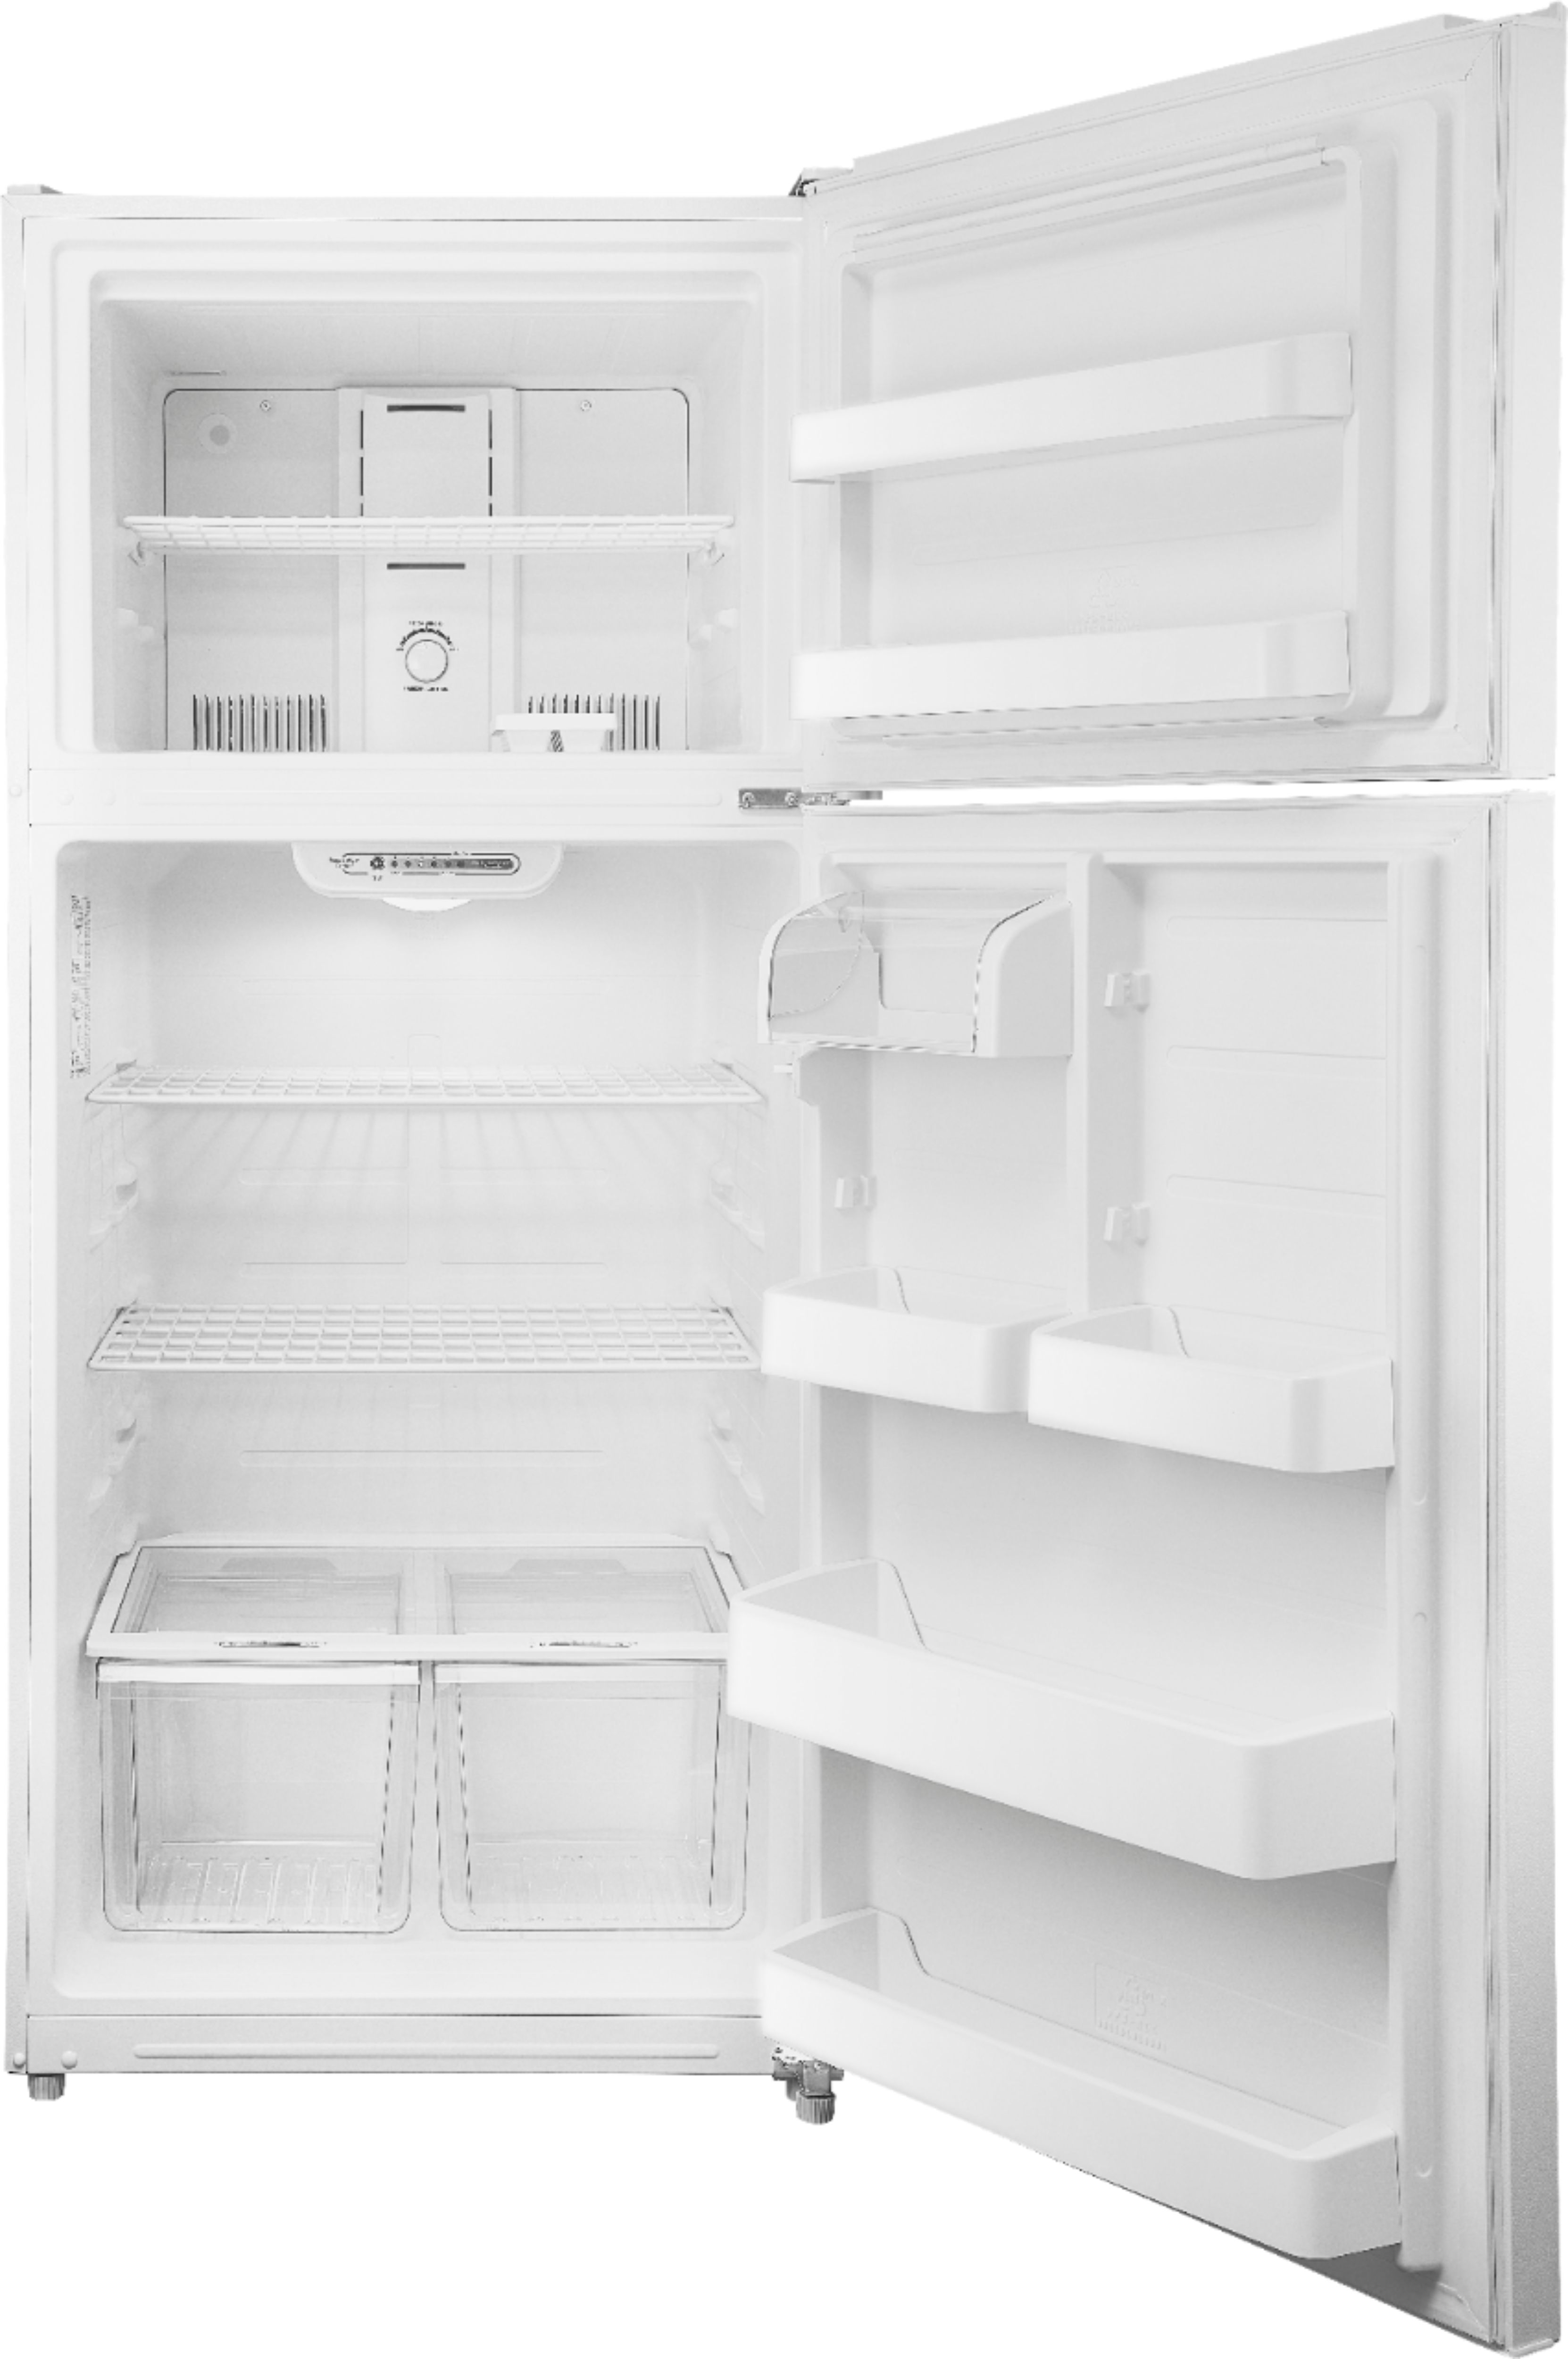 Insignia™ 18.1 Cu. Ft. Top-Freezer Refrigerator White NS  - Best Buy